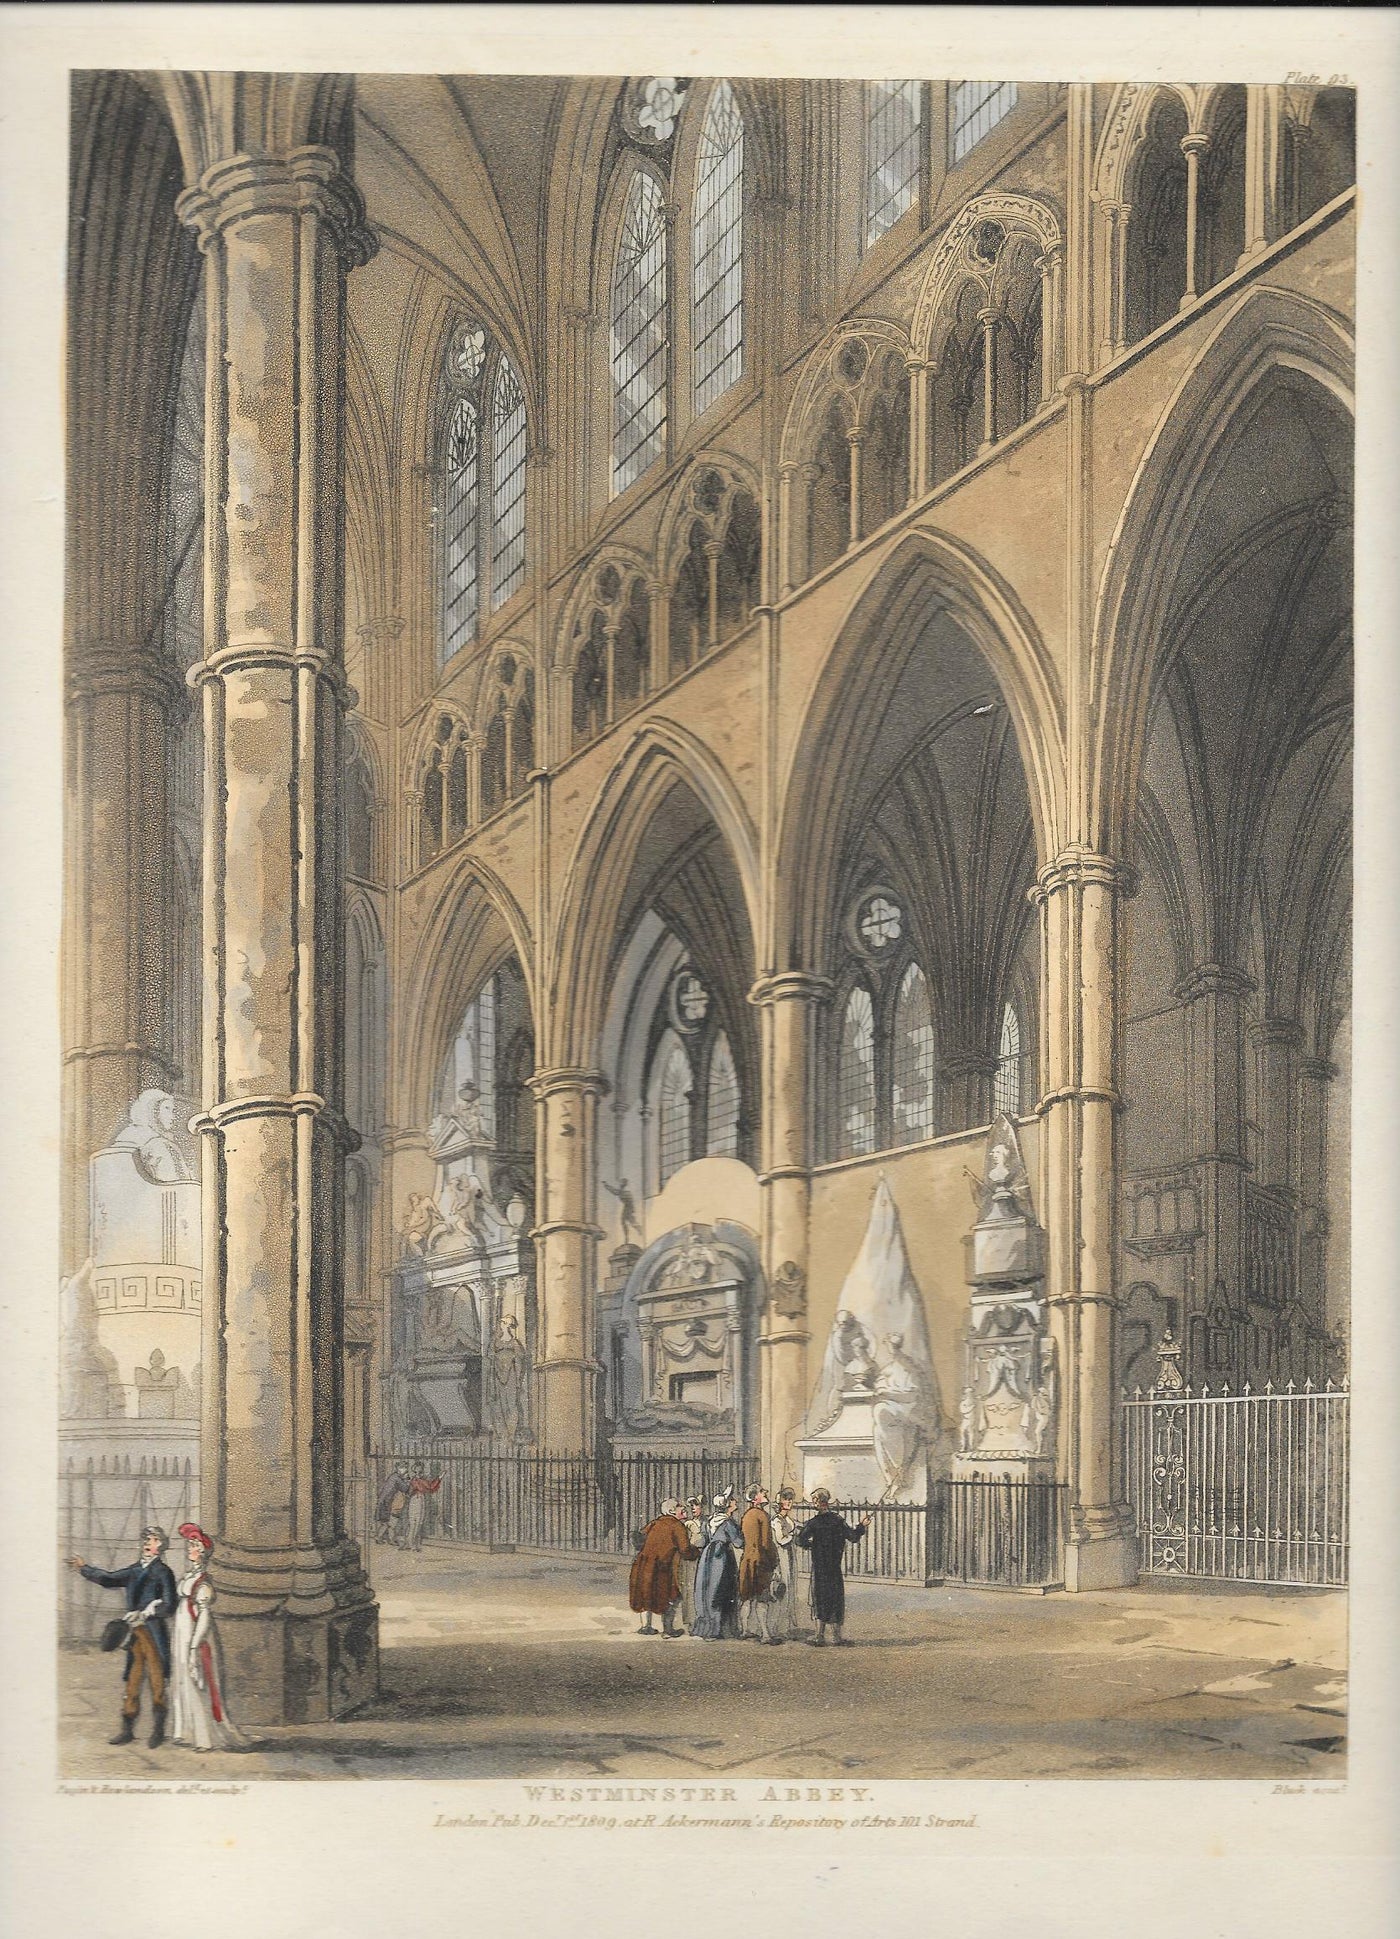 Westminster Abbey original Ackermann antique print dated 1809